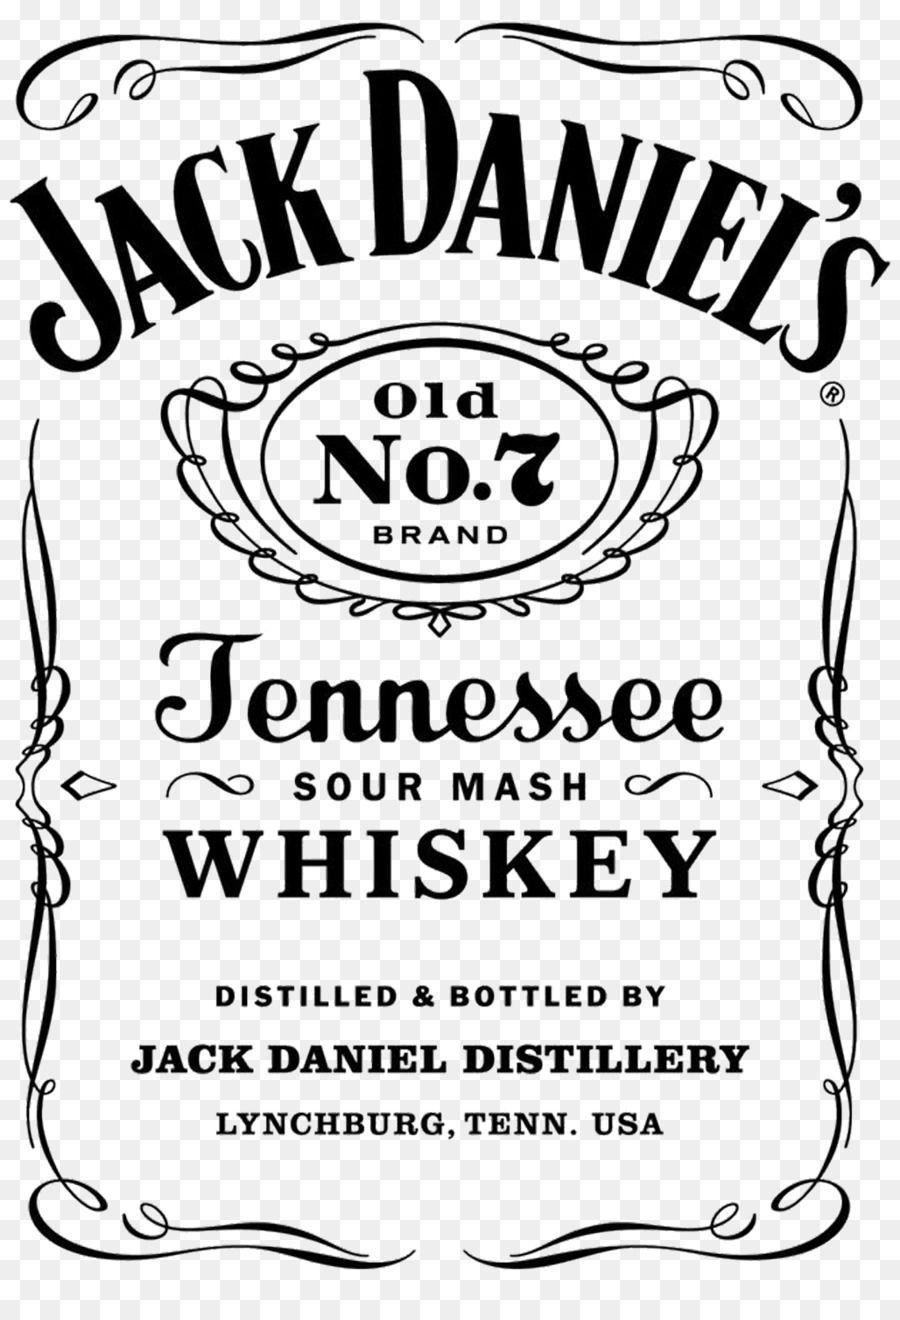 Jack Daniel's Logo - Jack Daniel's Rye whiskey Logo daniels png download